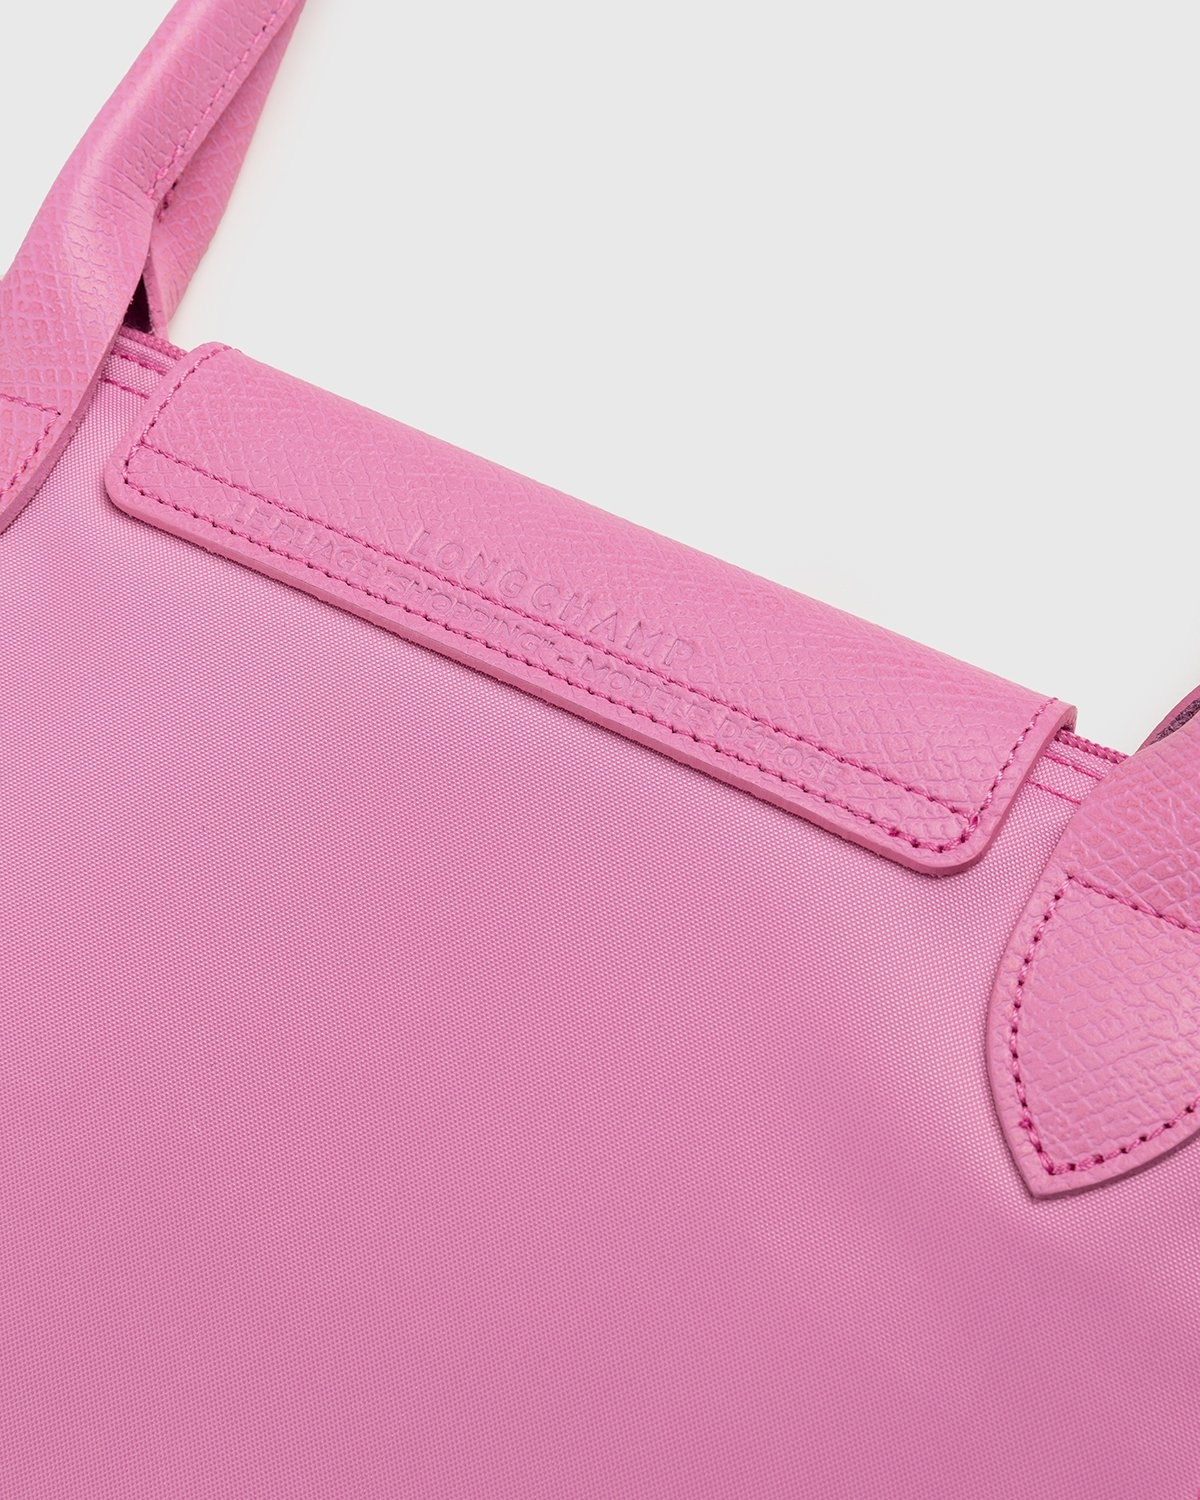 Longchamp Antique Pink Le Pliage Cuir Medium Shopping Tote (Logo